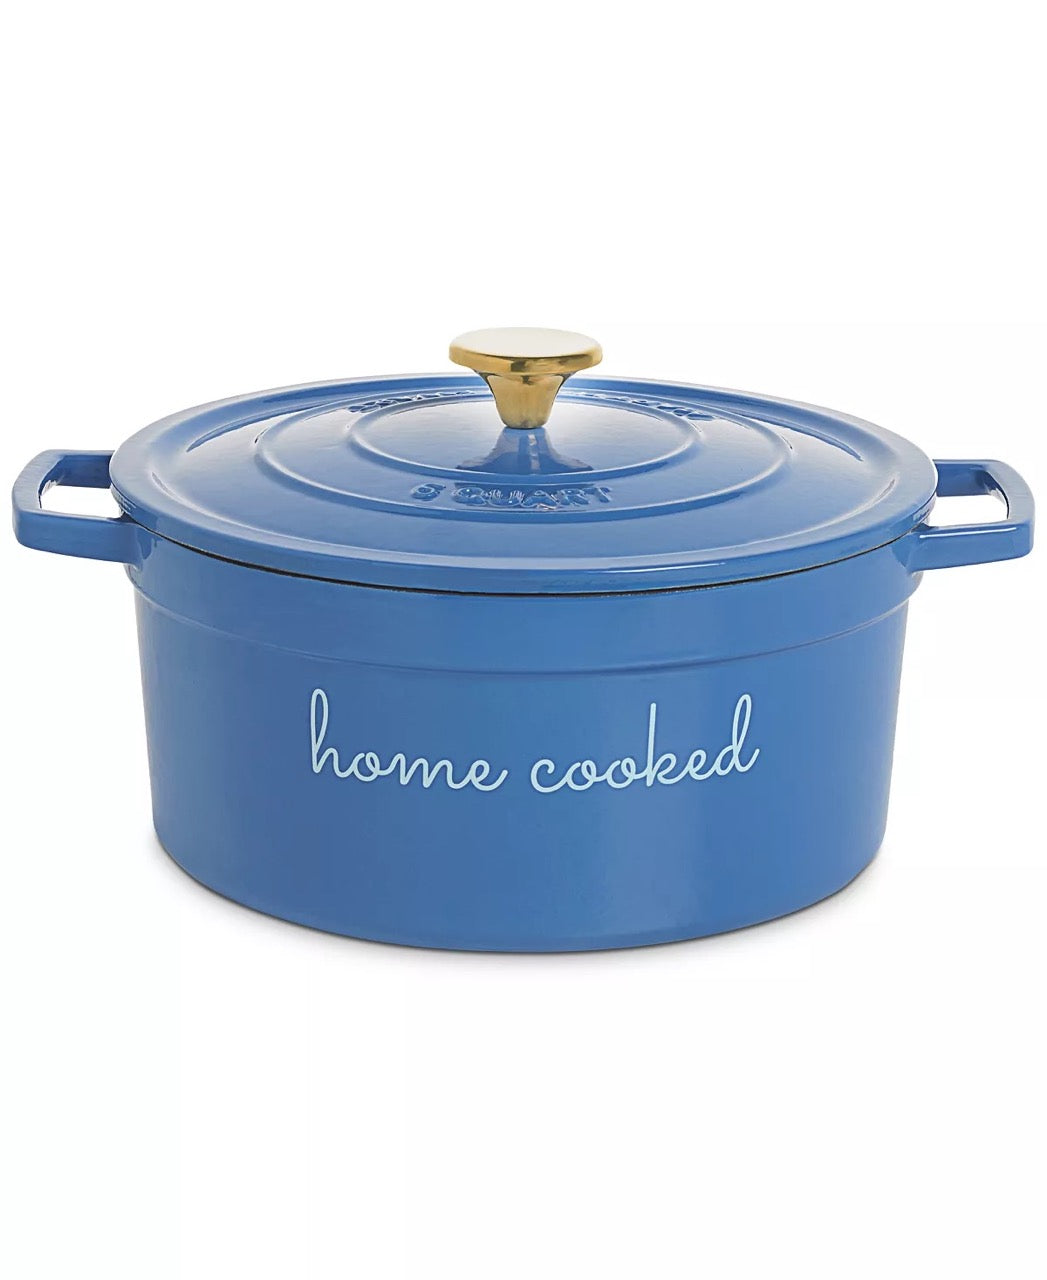 MARTHA STEWART 6QT Dutch Oven ‘Home Cooked’ in Blue